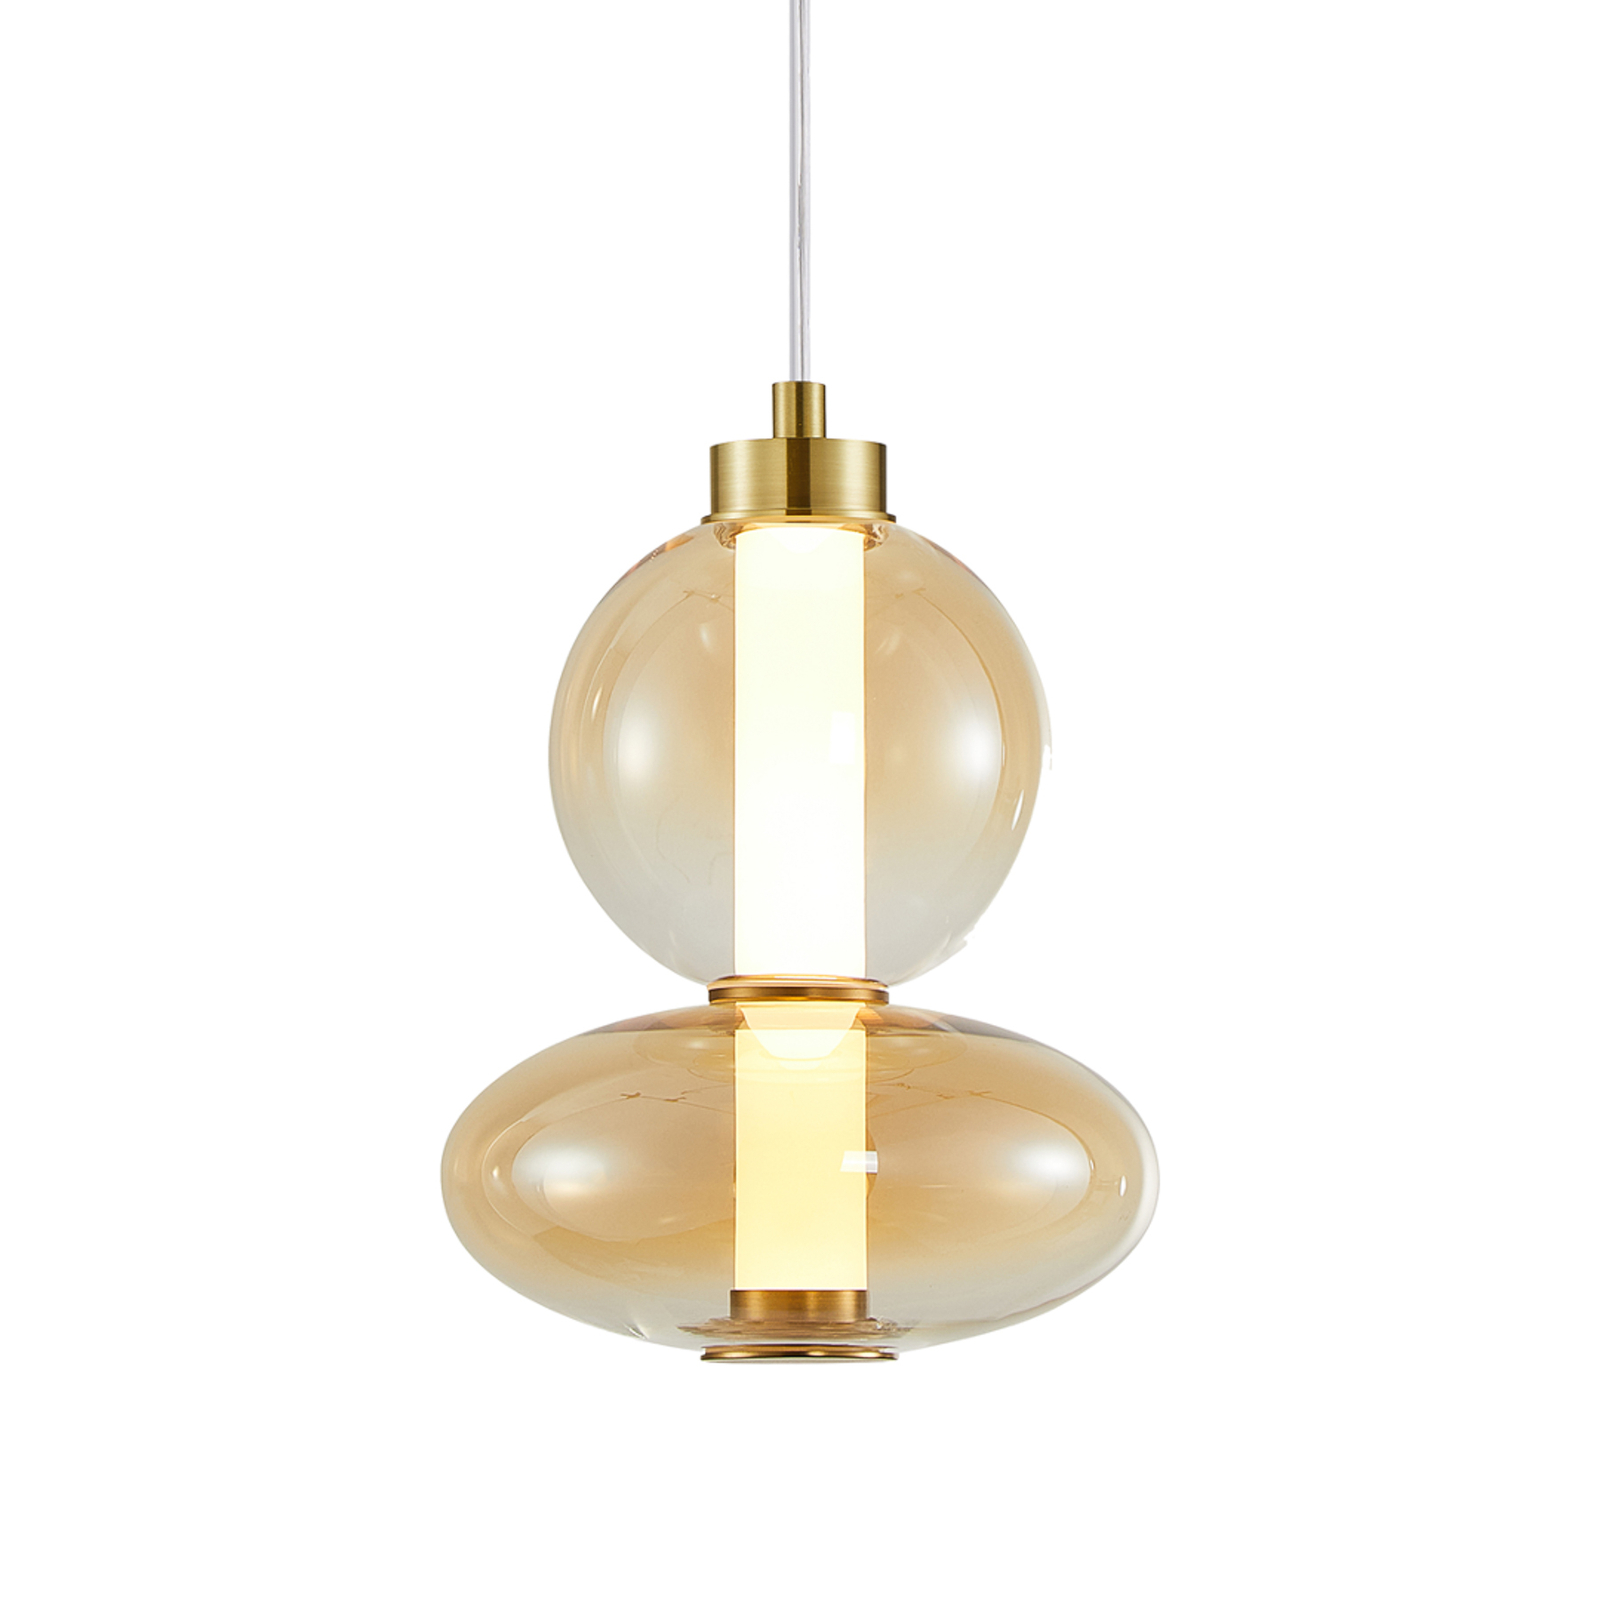 LED pendant light Daphne, amber-transparent glass, height 28 cm